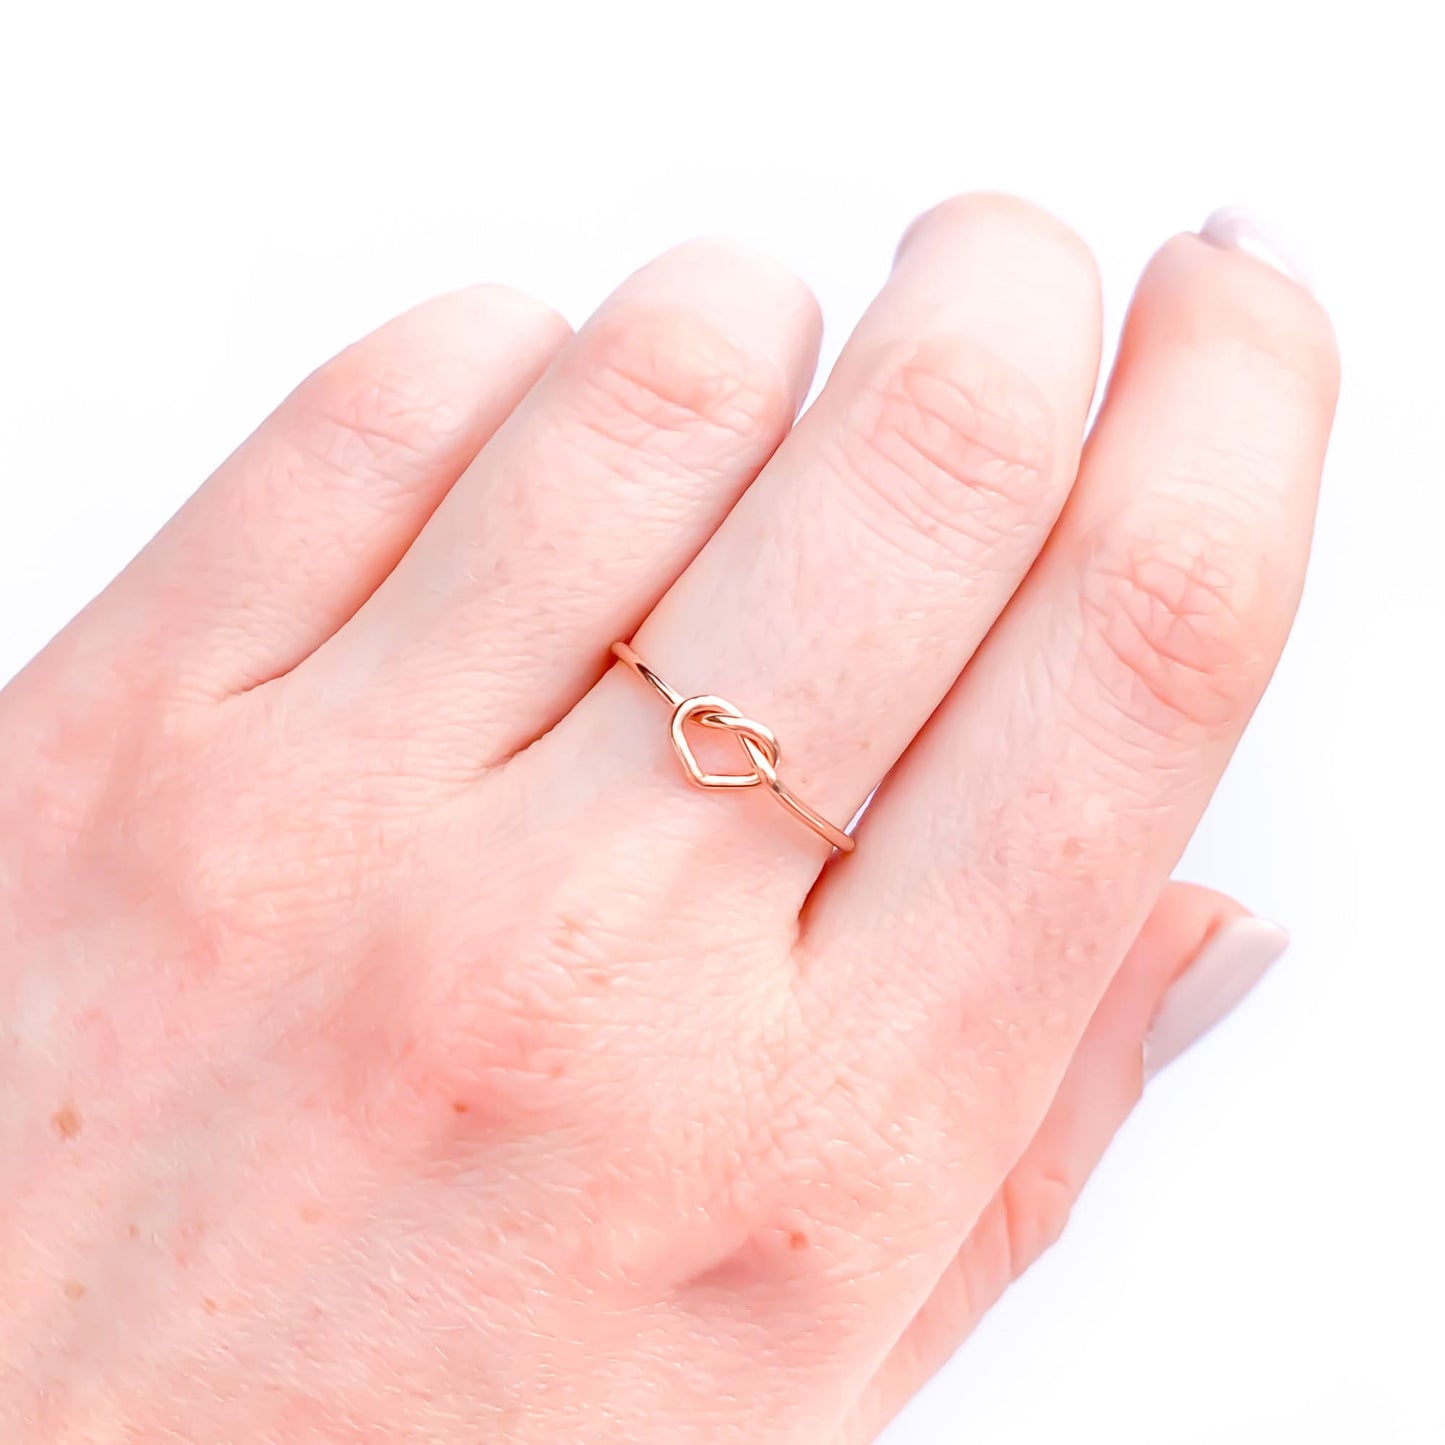 Heart Knot Ring, 14K Rose Gold Filled